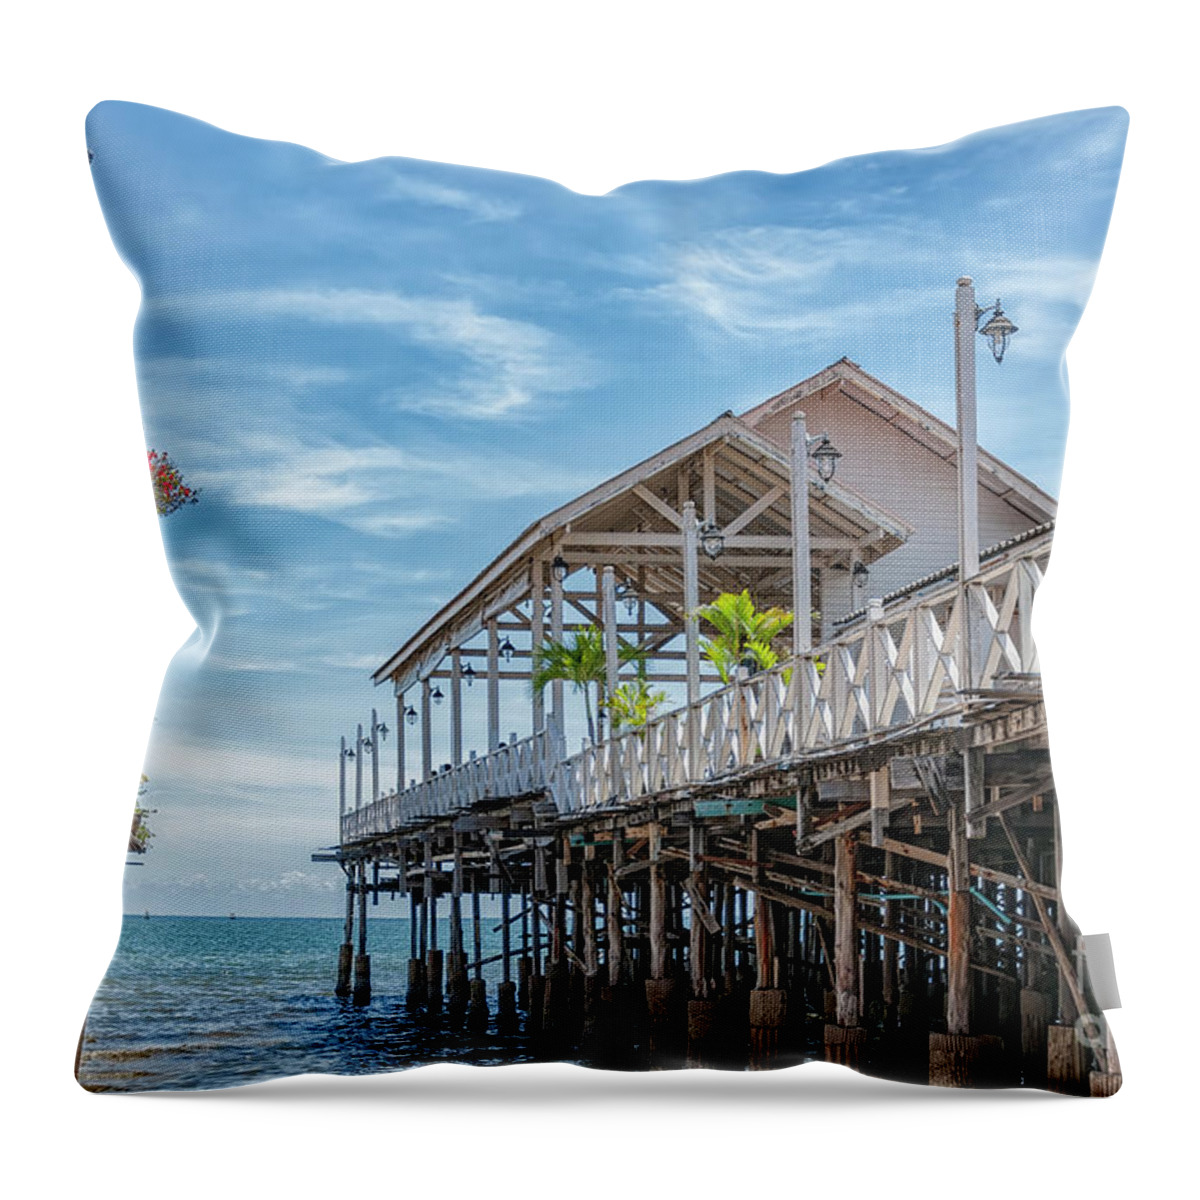 Boat Throw Pillow featuring the photograph Hua Hin Beach Encroaching Restaurant Pier by Antony McAulay